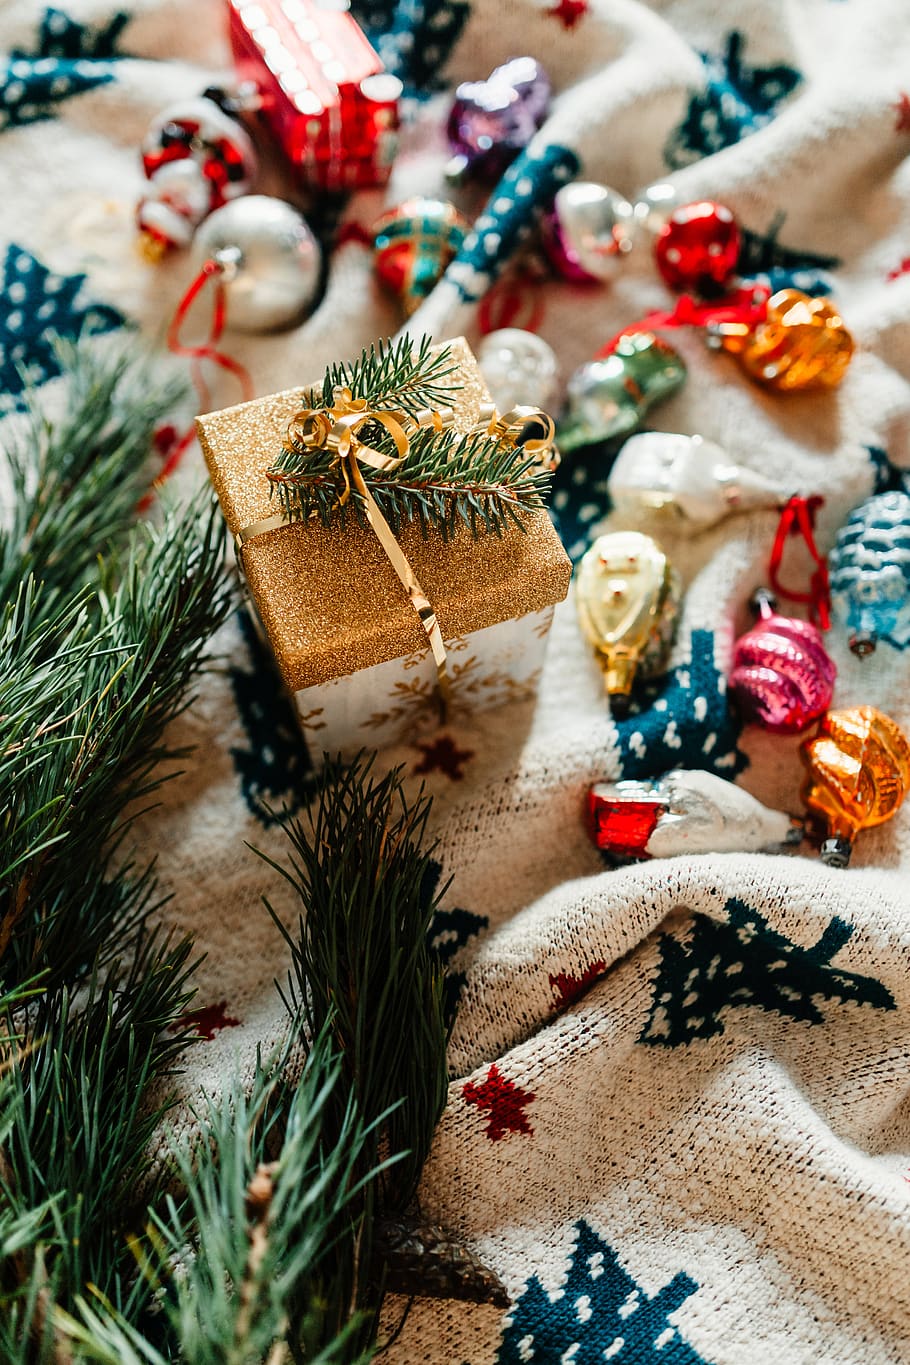 christmas gift, xmas, gift, present, tree balls, Christmas balls, decorations, christmas decorations, winter, december